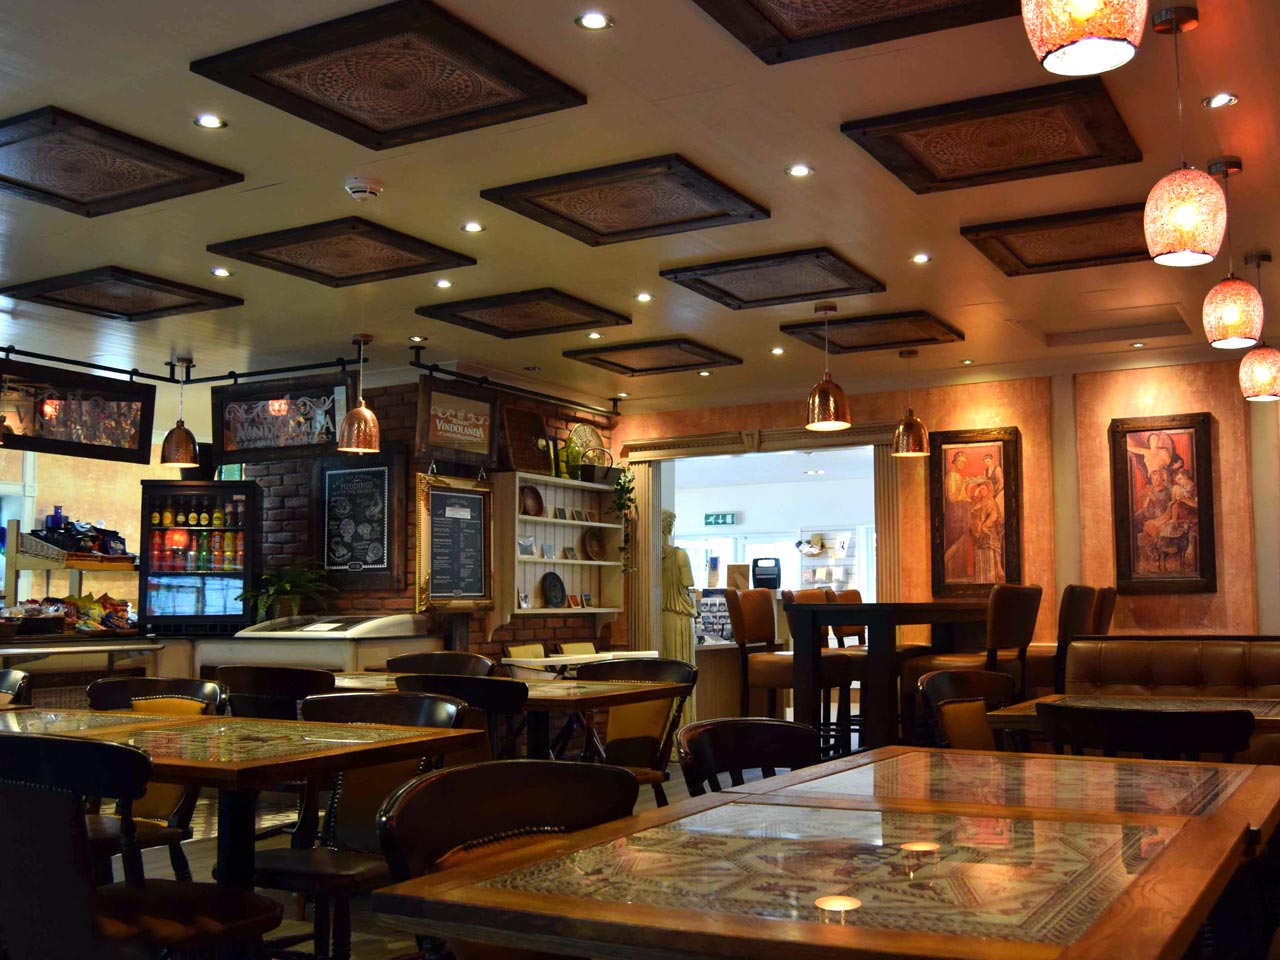 vindolanda coffee ahop and restaurant interior